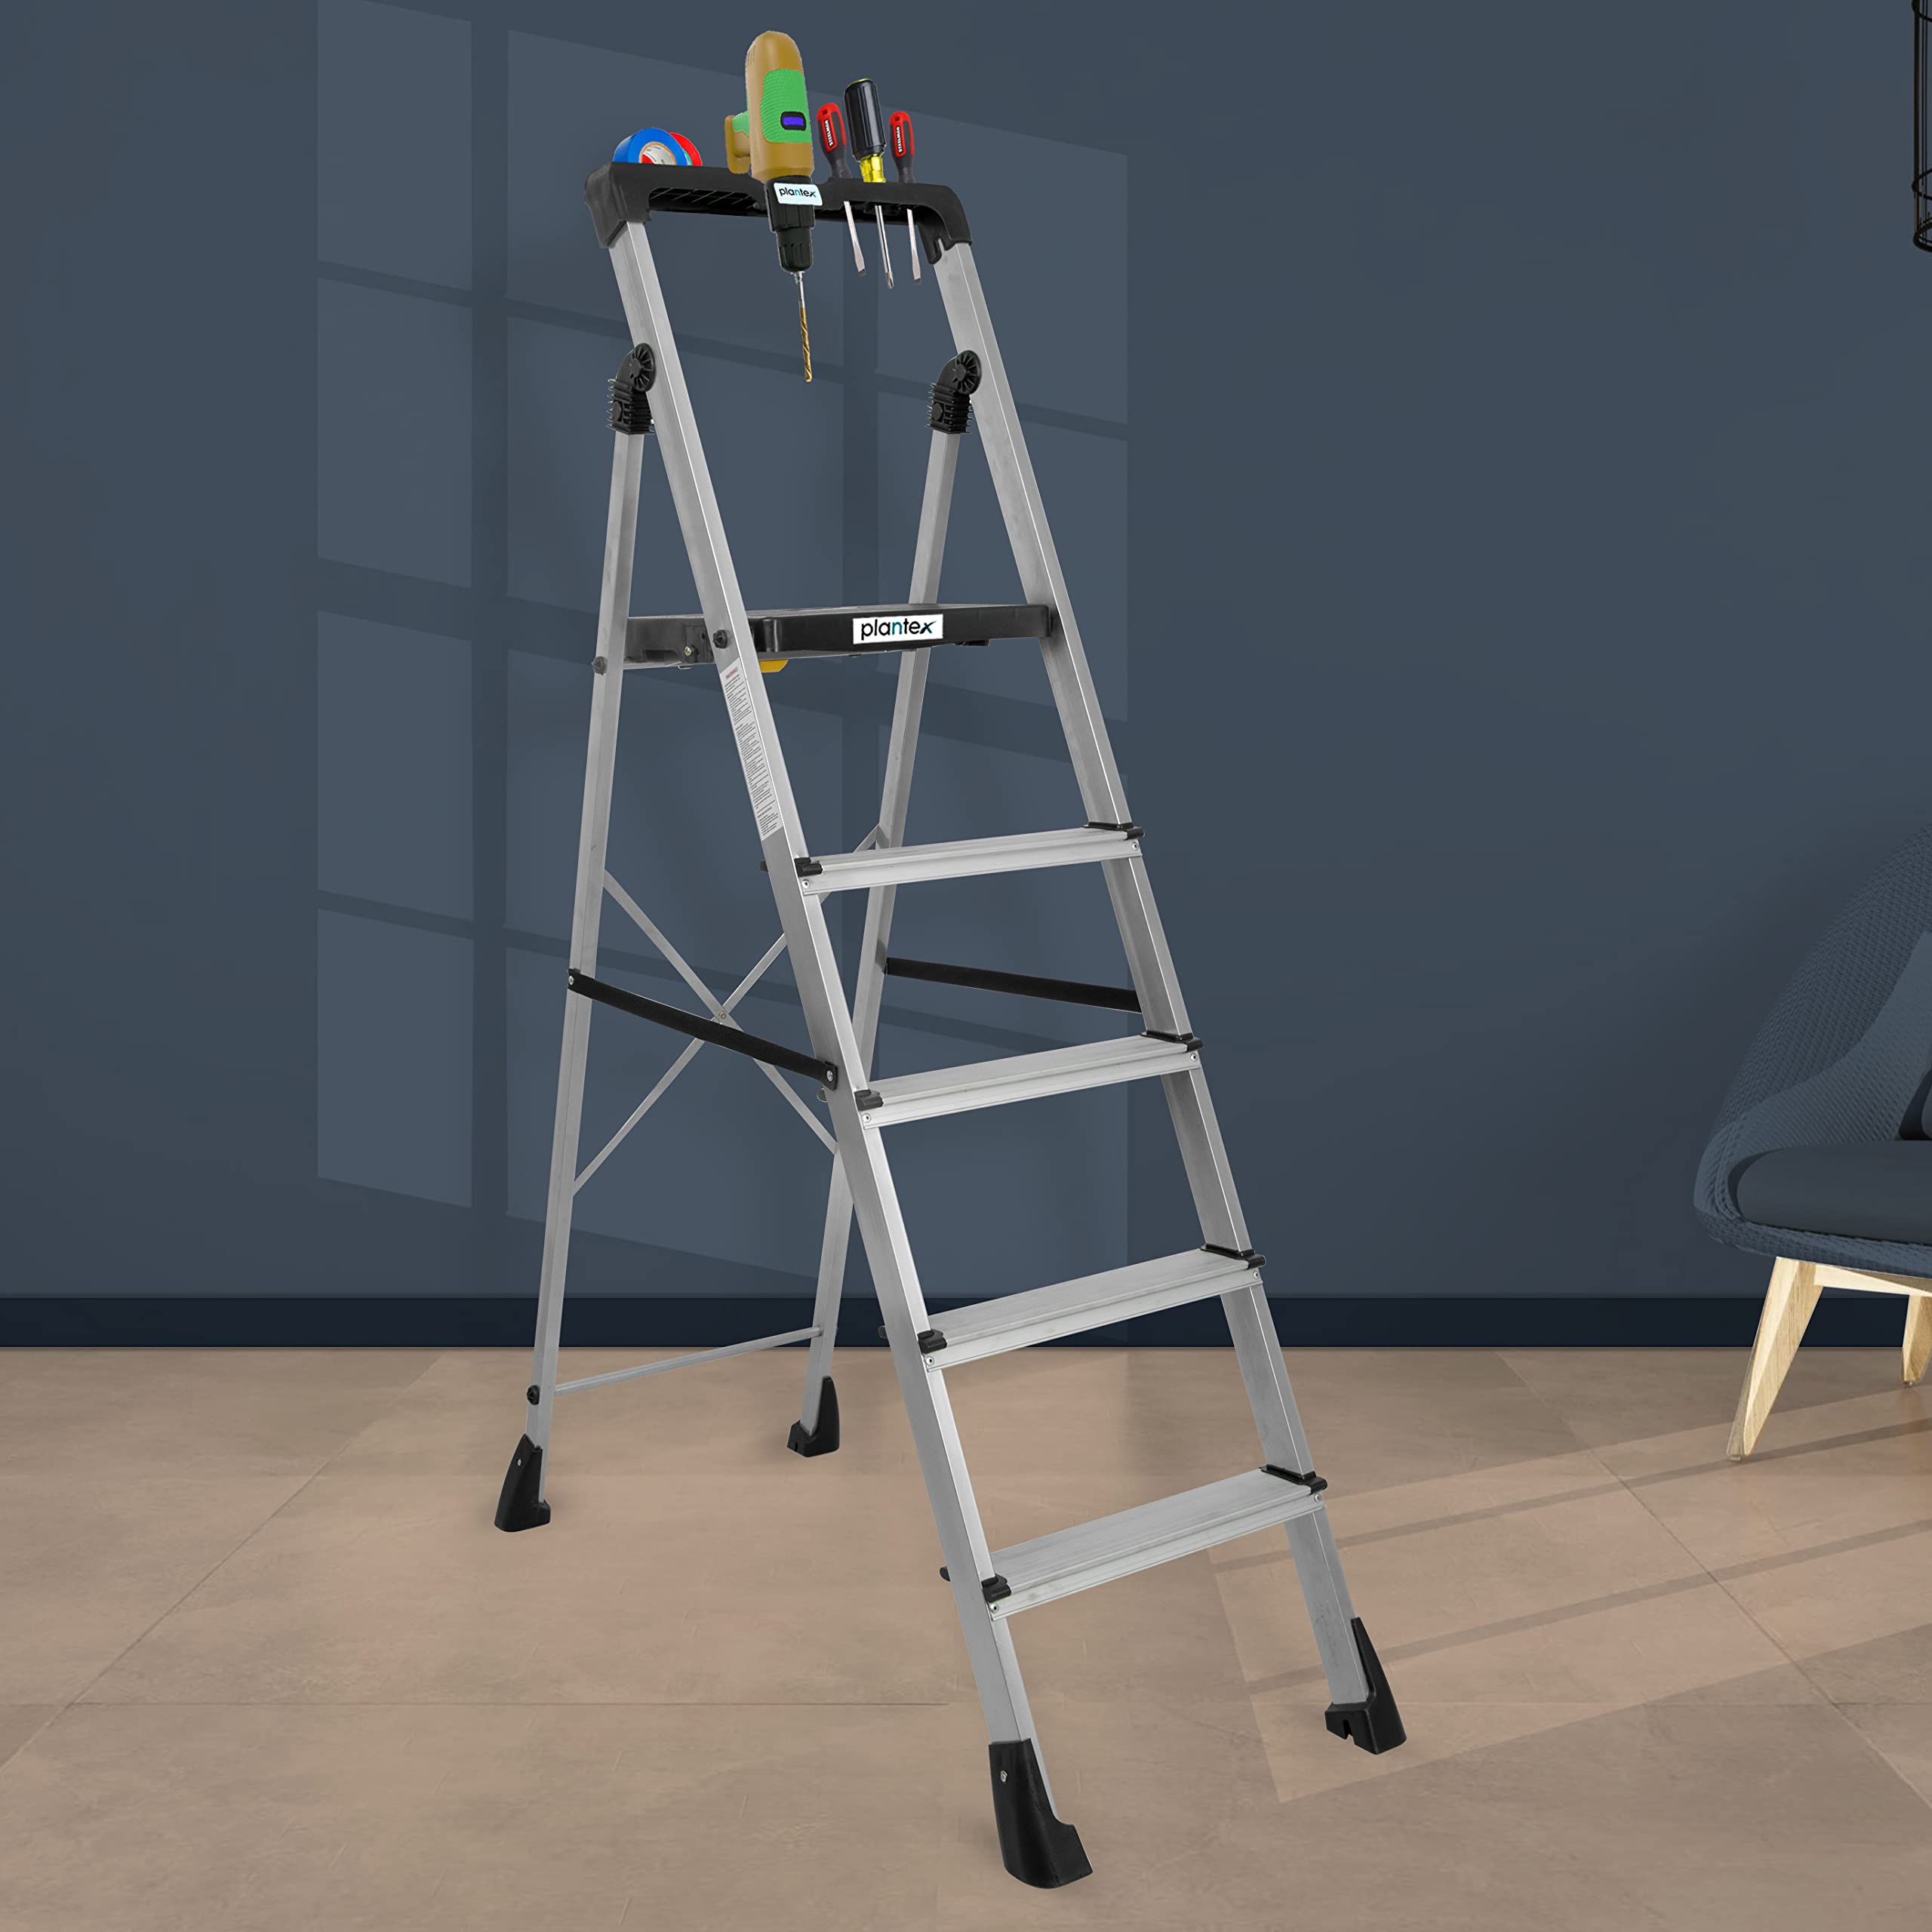 Plantex Thor Aluminium Step Folding Ladder 5 Step for Home with Advanced Locking System - Anti Slip 5 Step Ladder (Silver & Black)